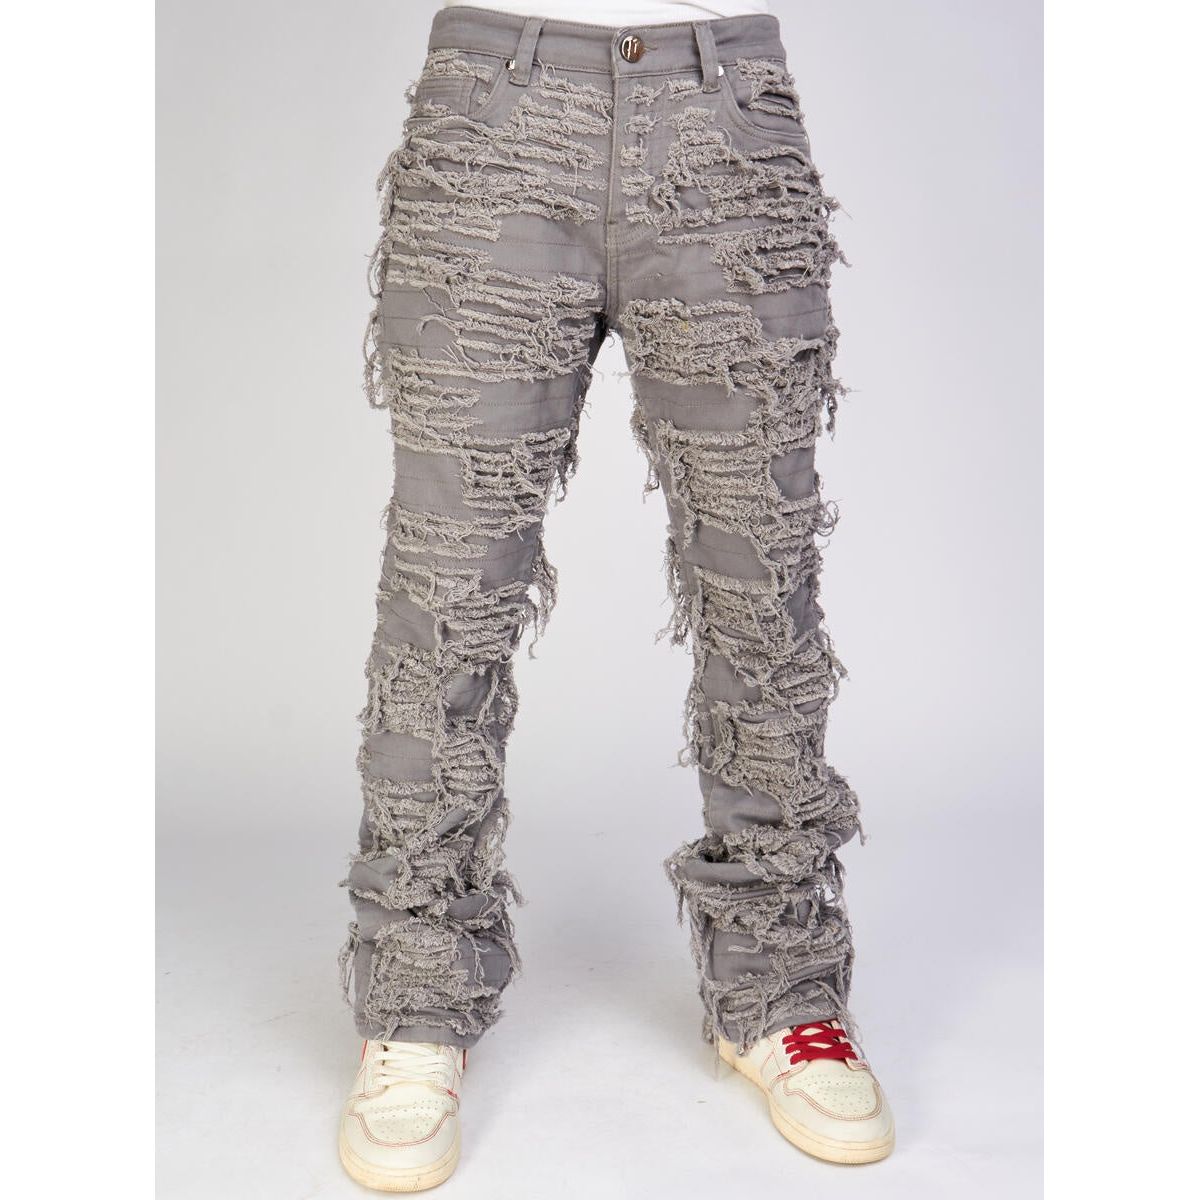 Politics Jeans Grey Thrashed Distressed Stacked Flare (Debris515)